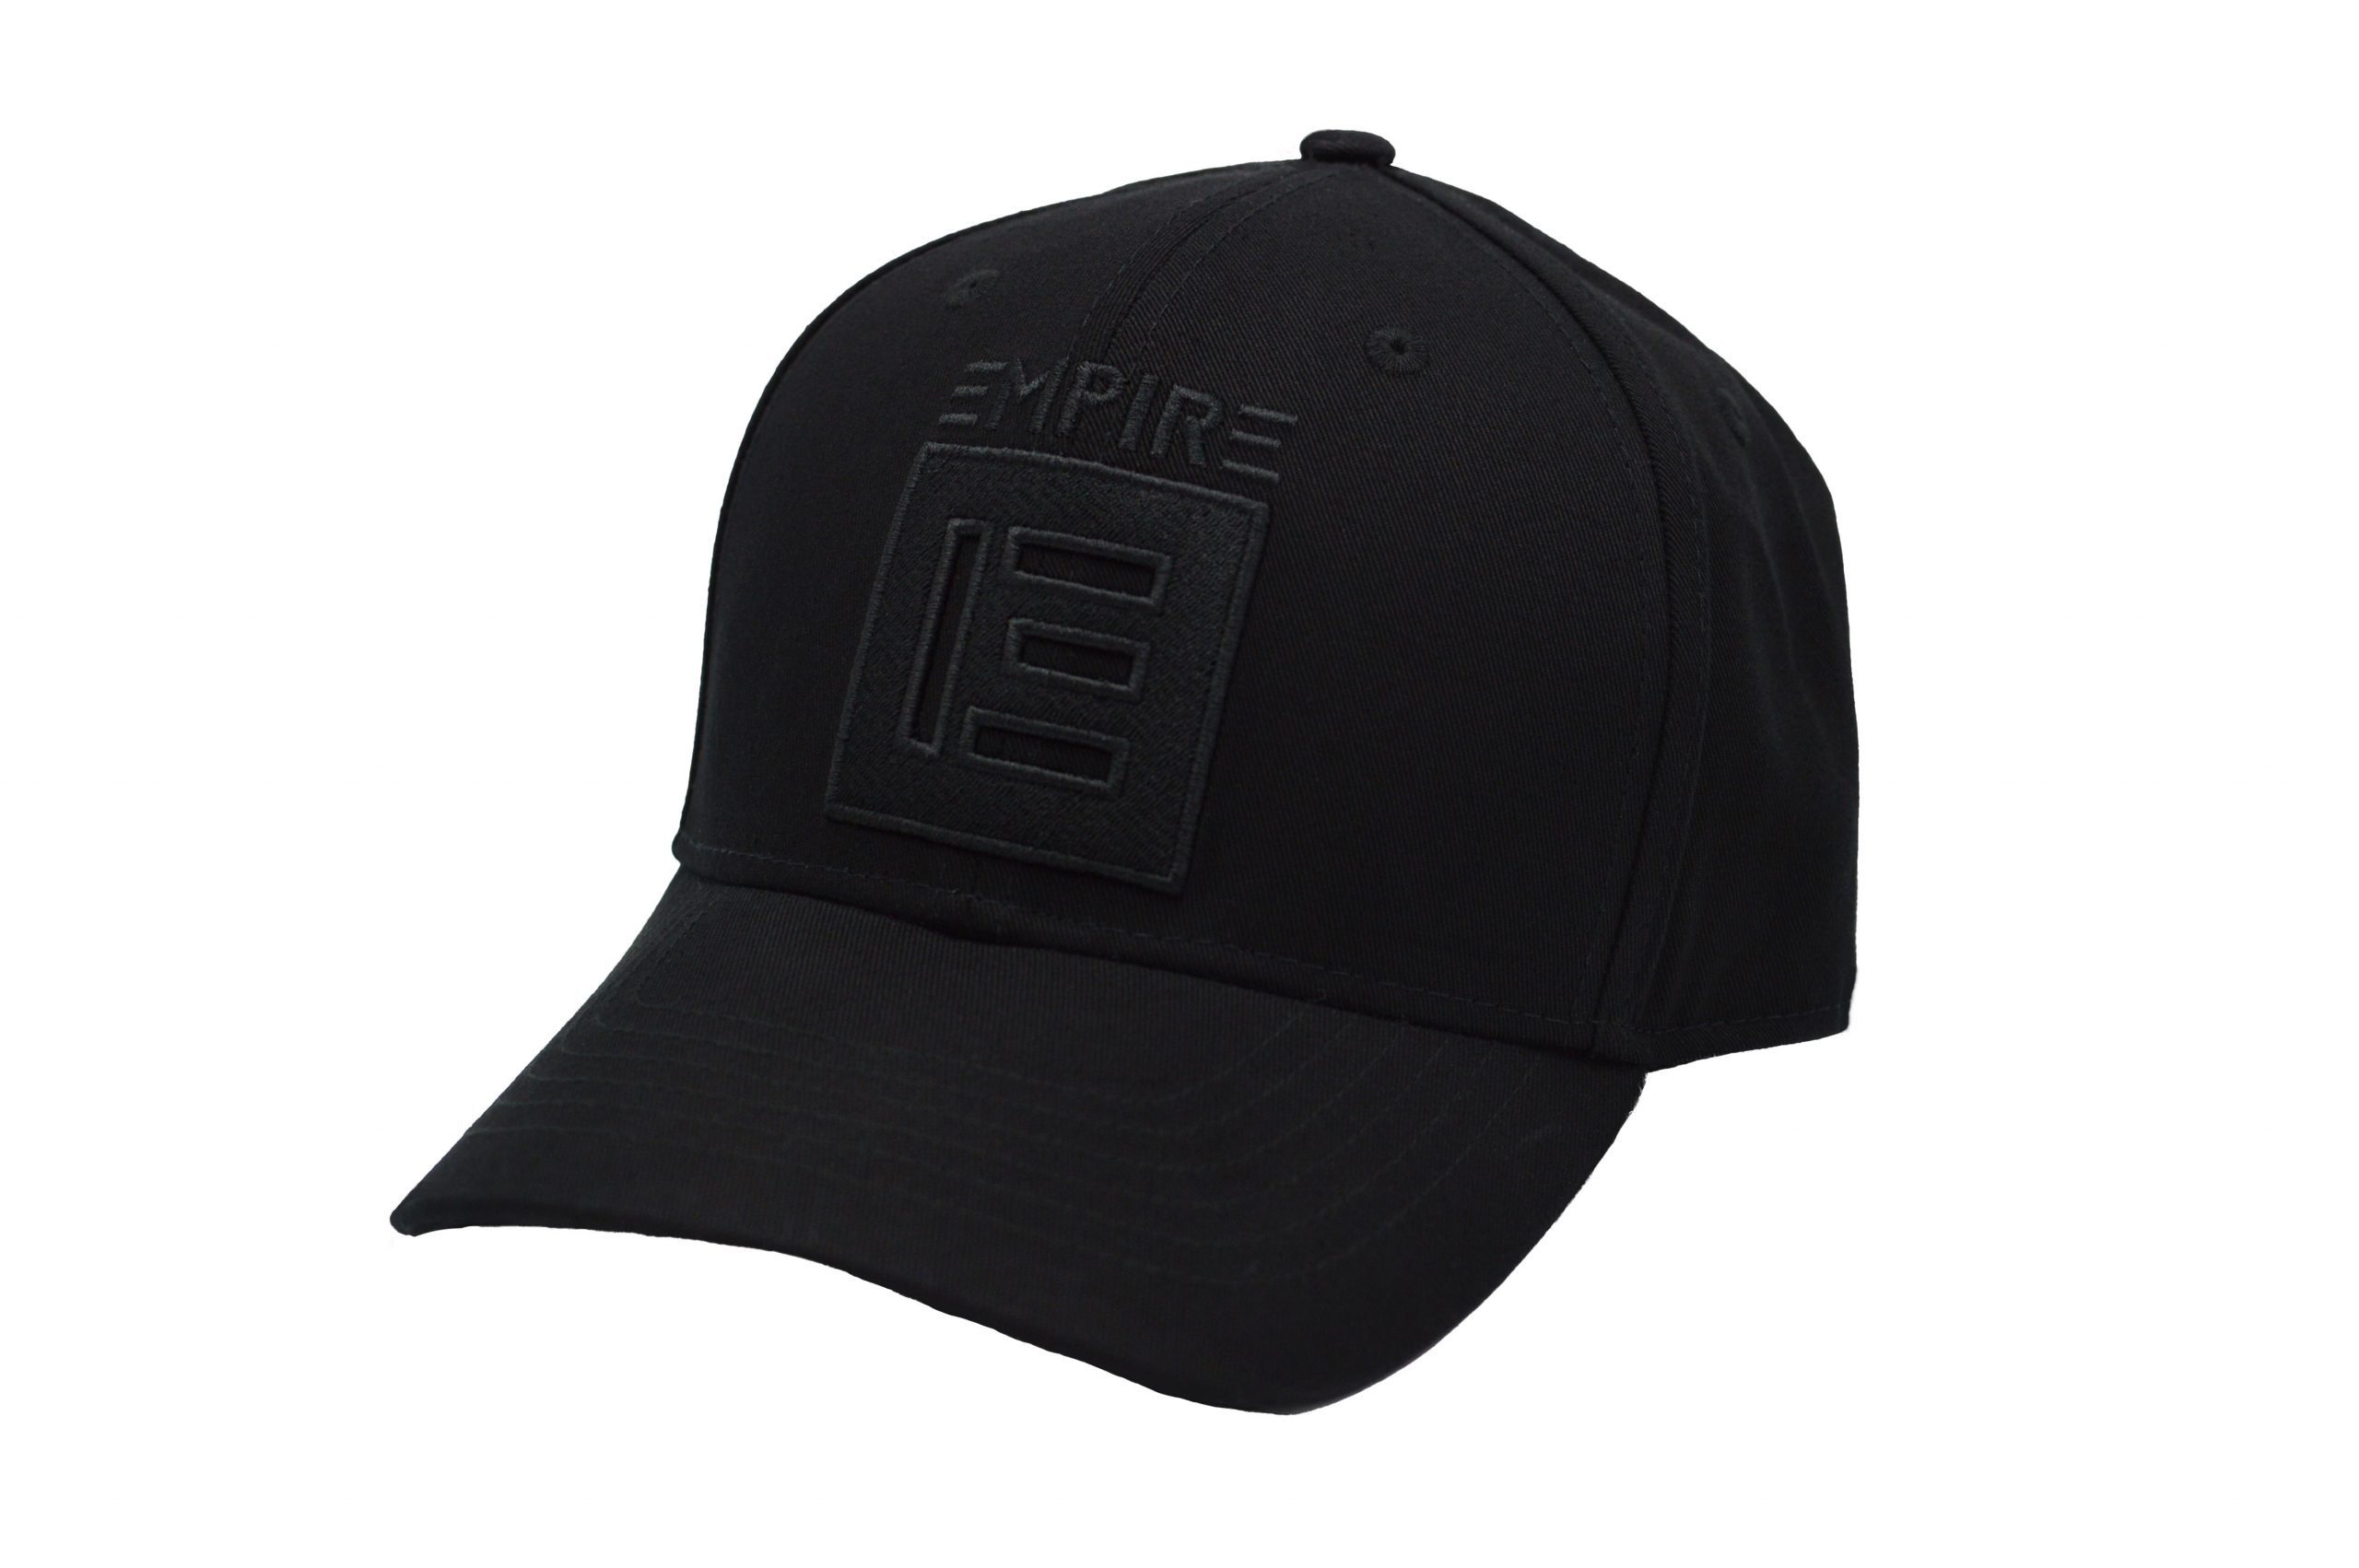 EMPIRE-THIRTEEN Baseball Cap "EMPIRE" CAP all black